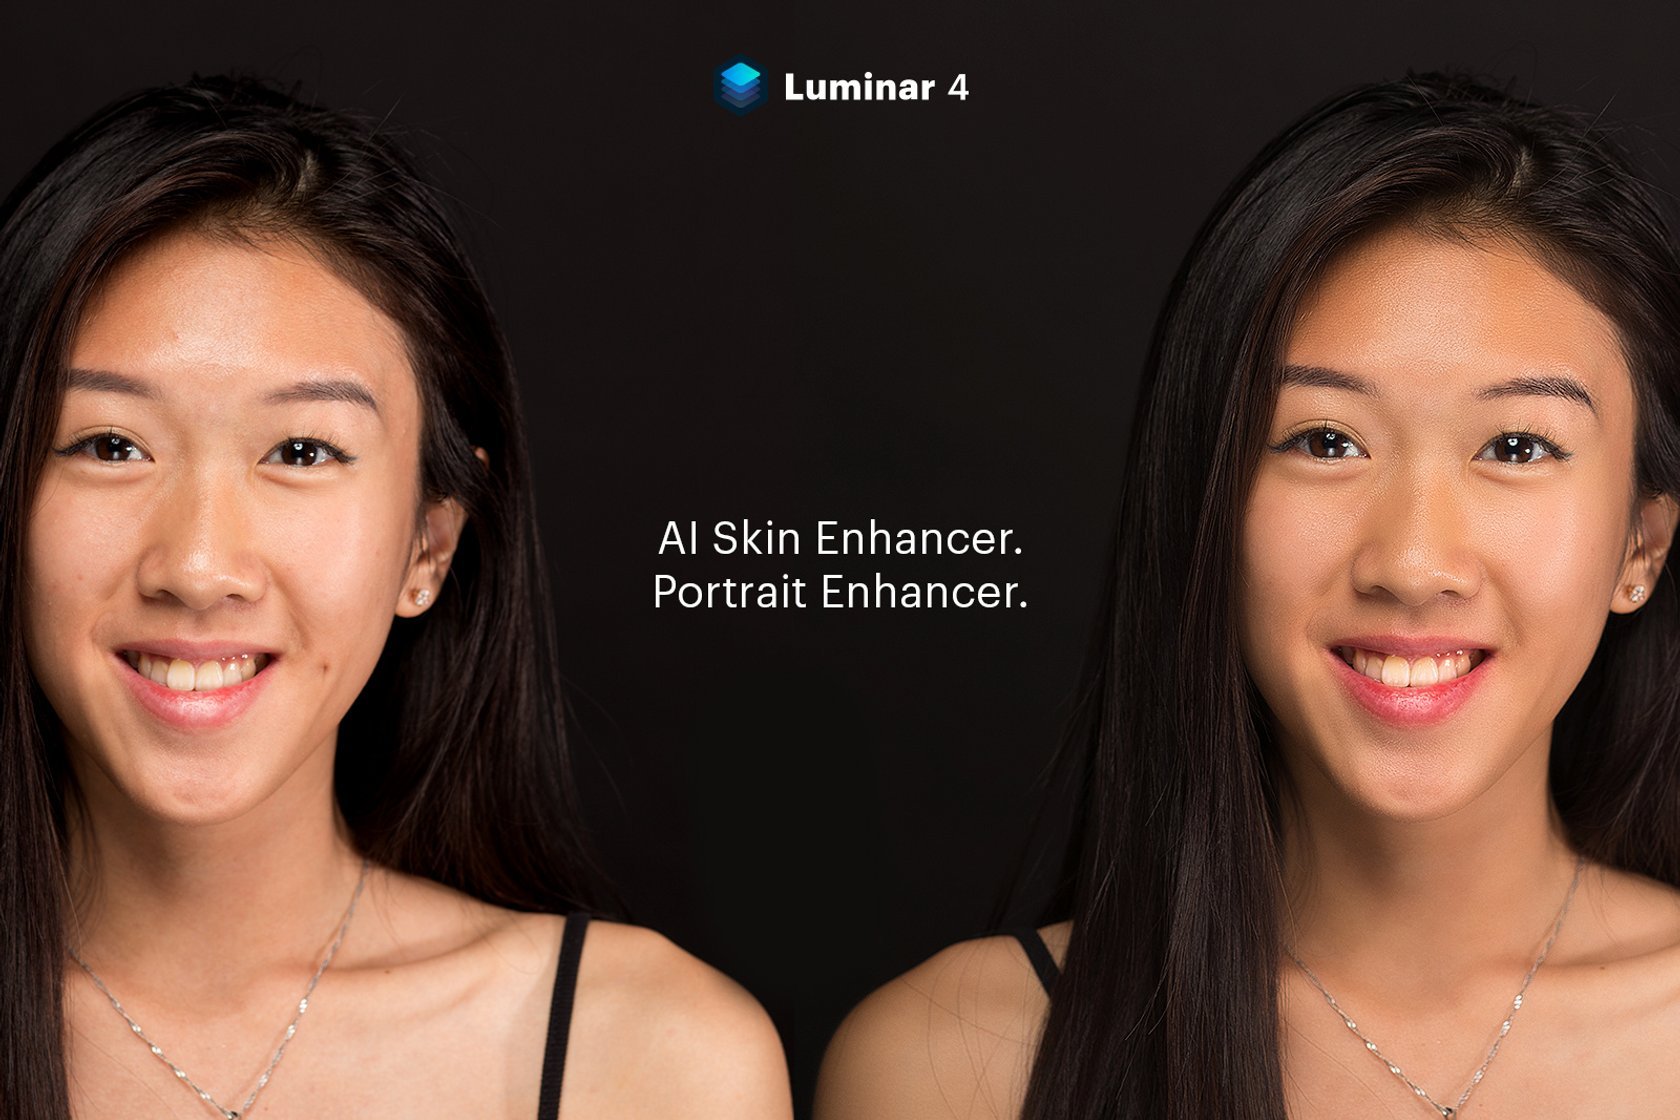 Make your portraits shine with Luminar 4 | Skylum Blog(3)